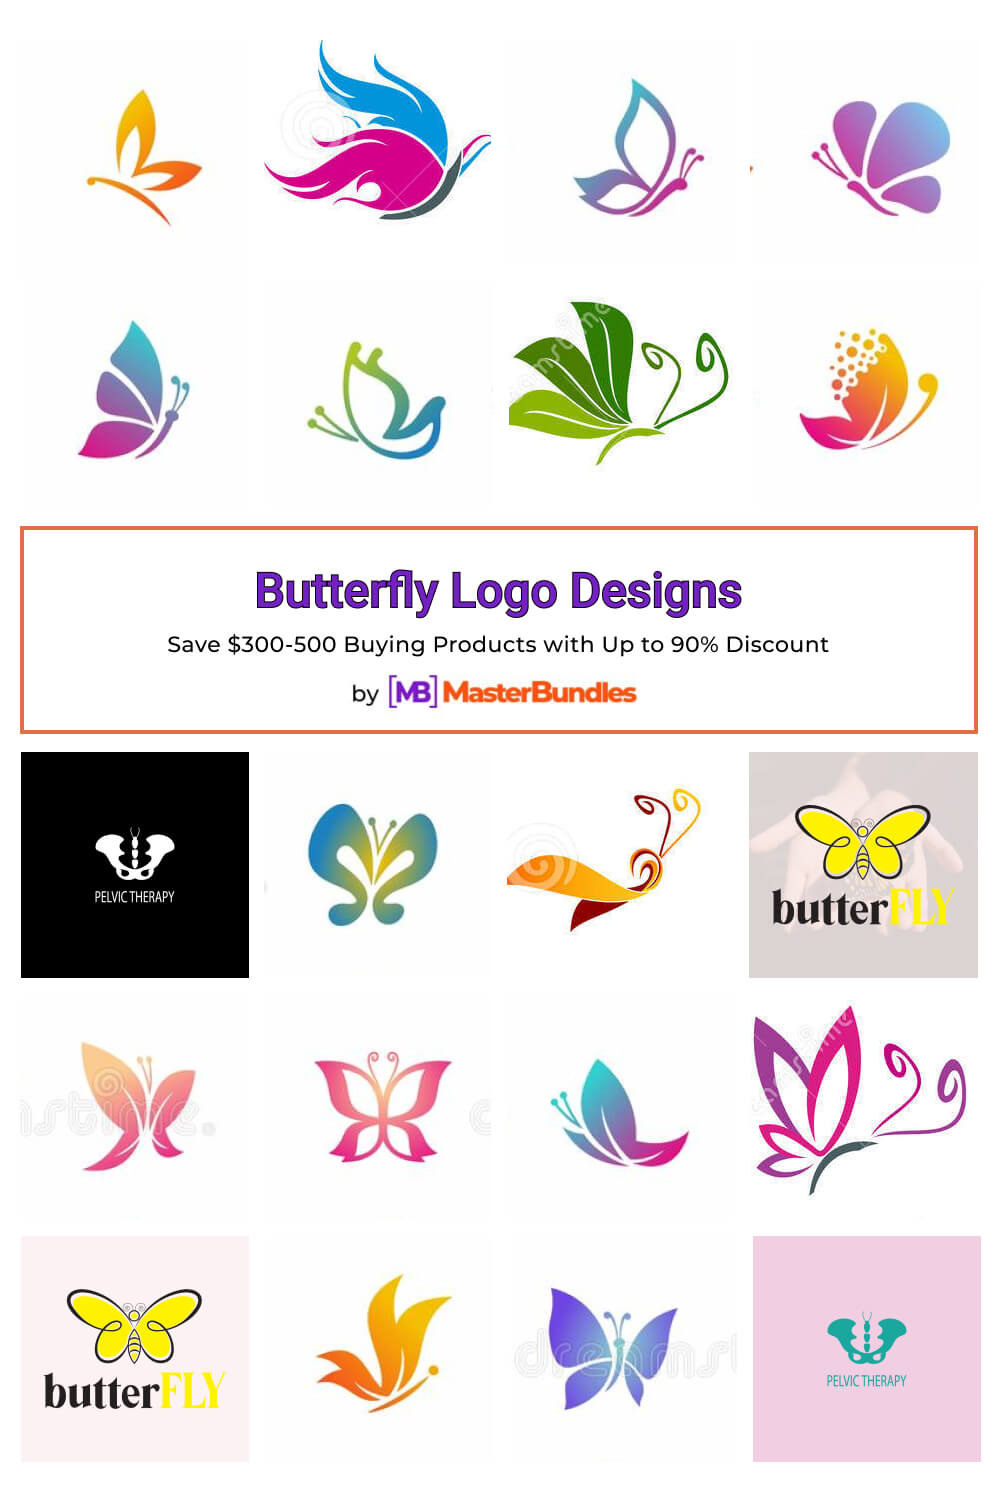 butterfly logo designs pinterest image.